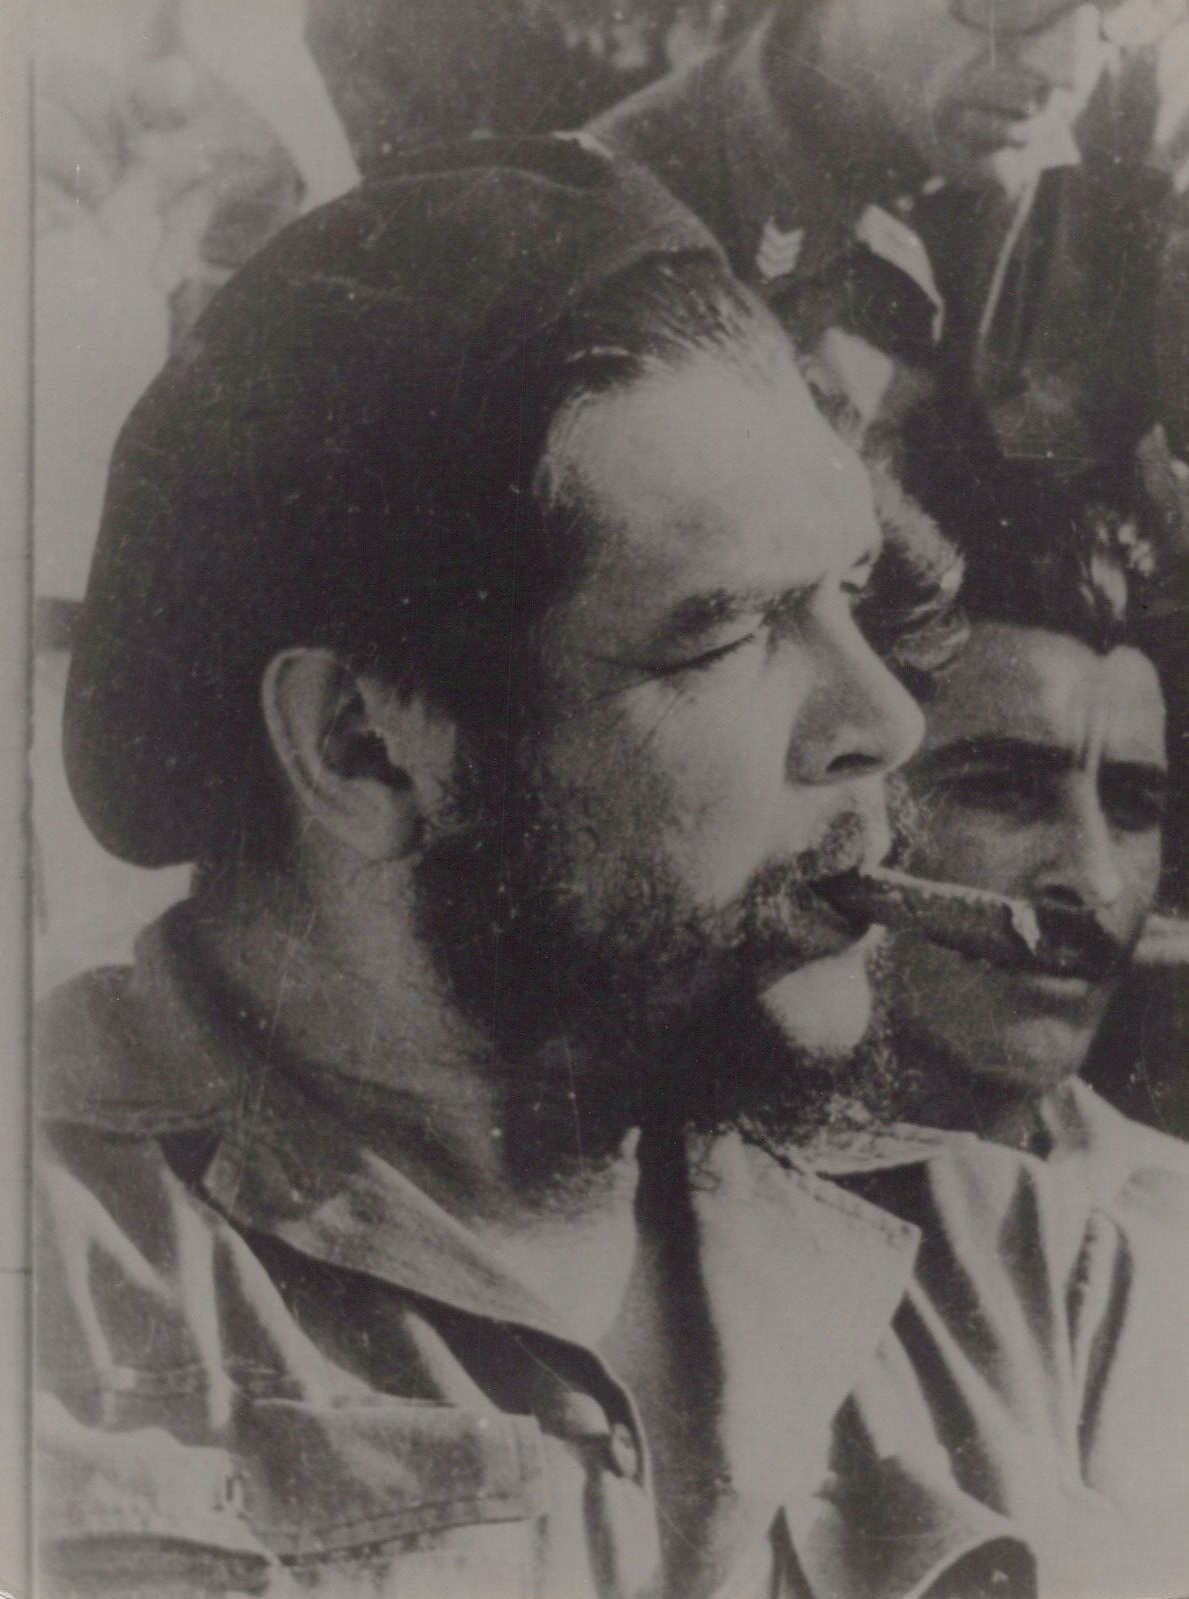 CUBA CUBAN REBEL COMMANDER ERNESTO CHE GUEVARA PORTRAIT 1960s KORDA Photo 141